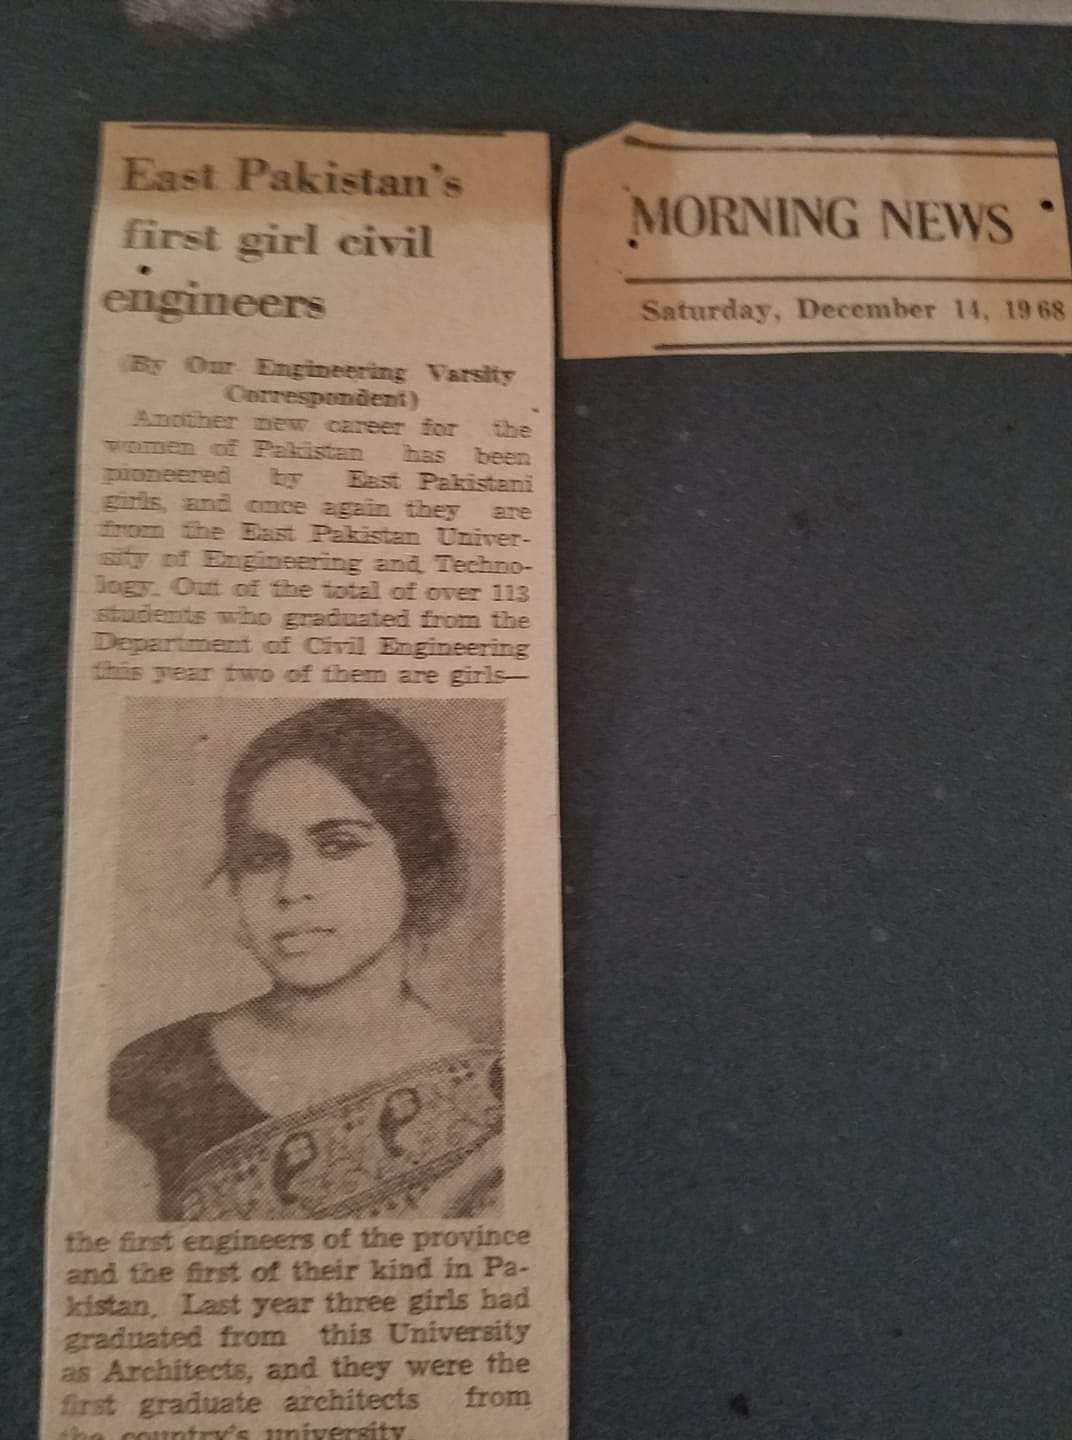 A photo of Morning News paper page shows Khaleda Shahriar with her achievement. Photo: Galib Ashraf